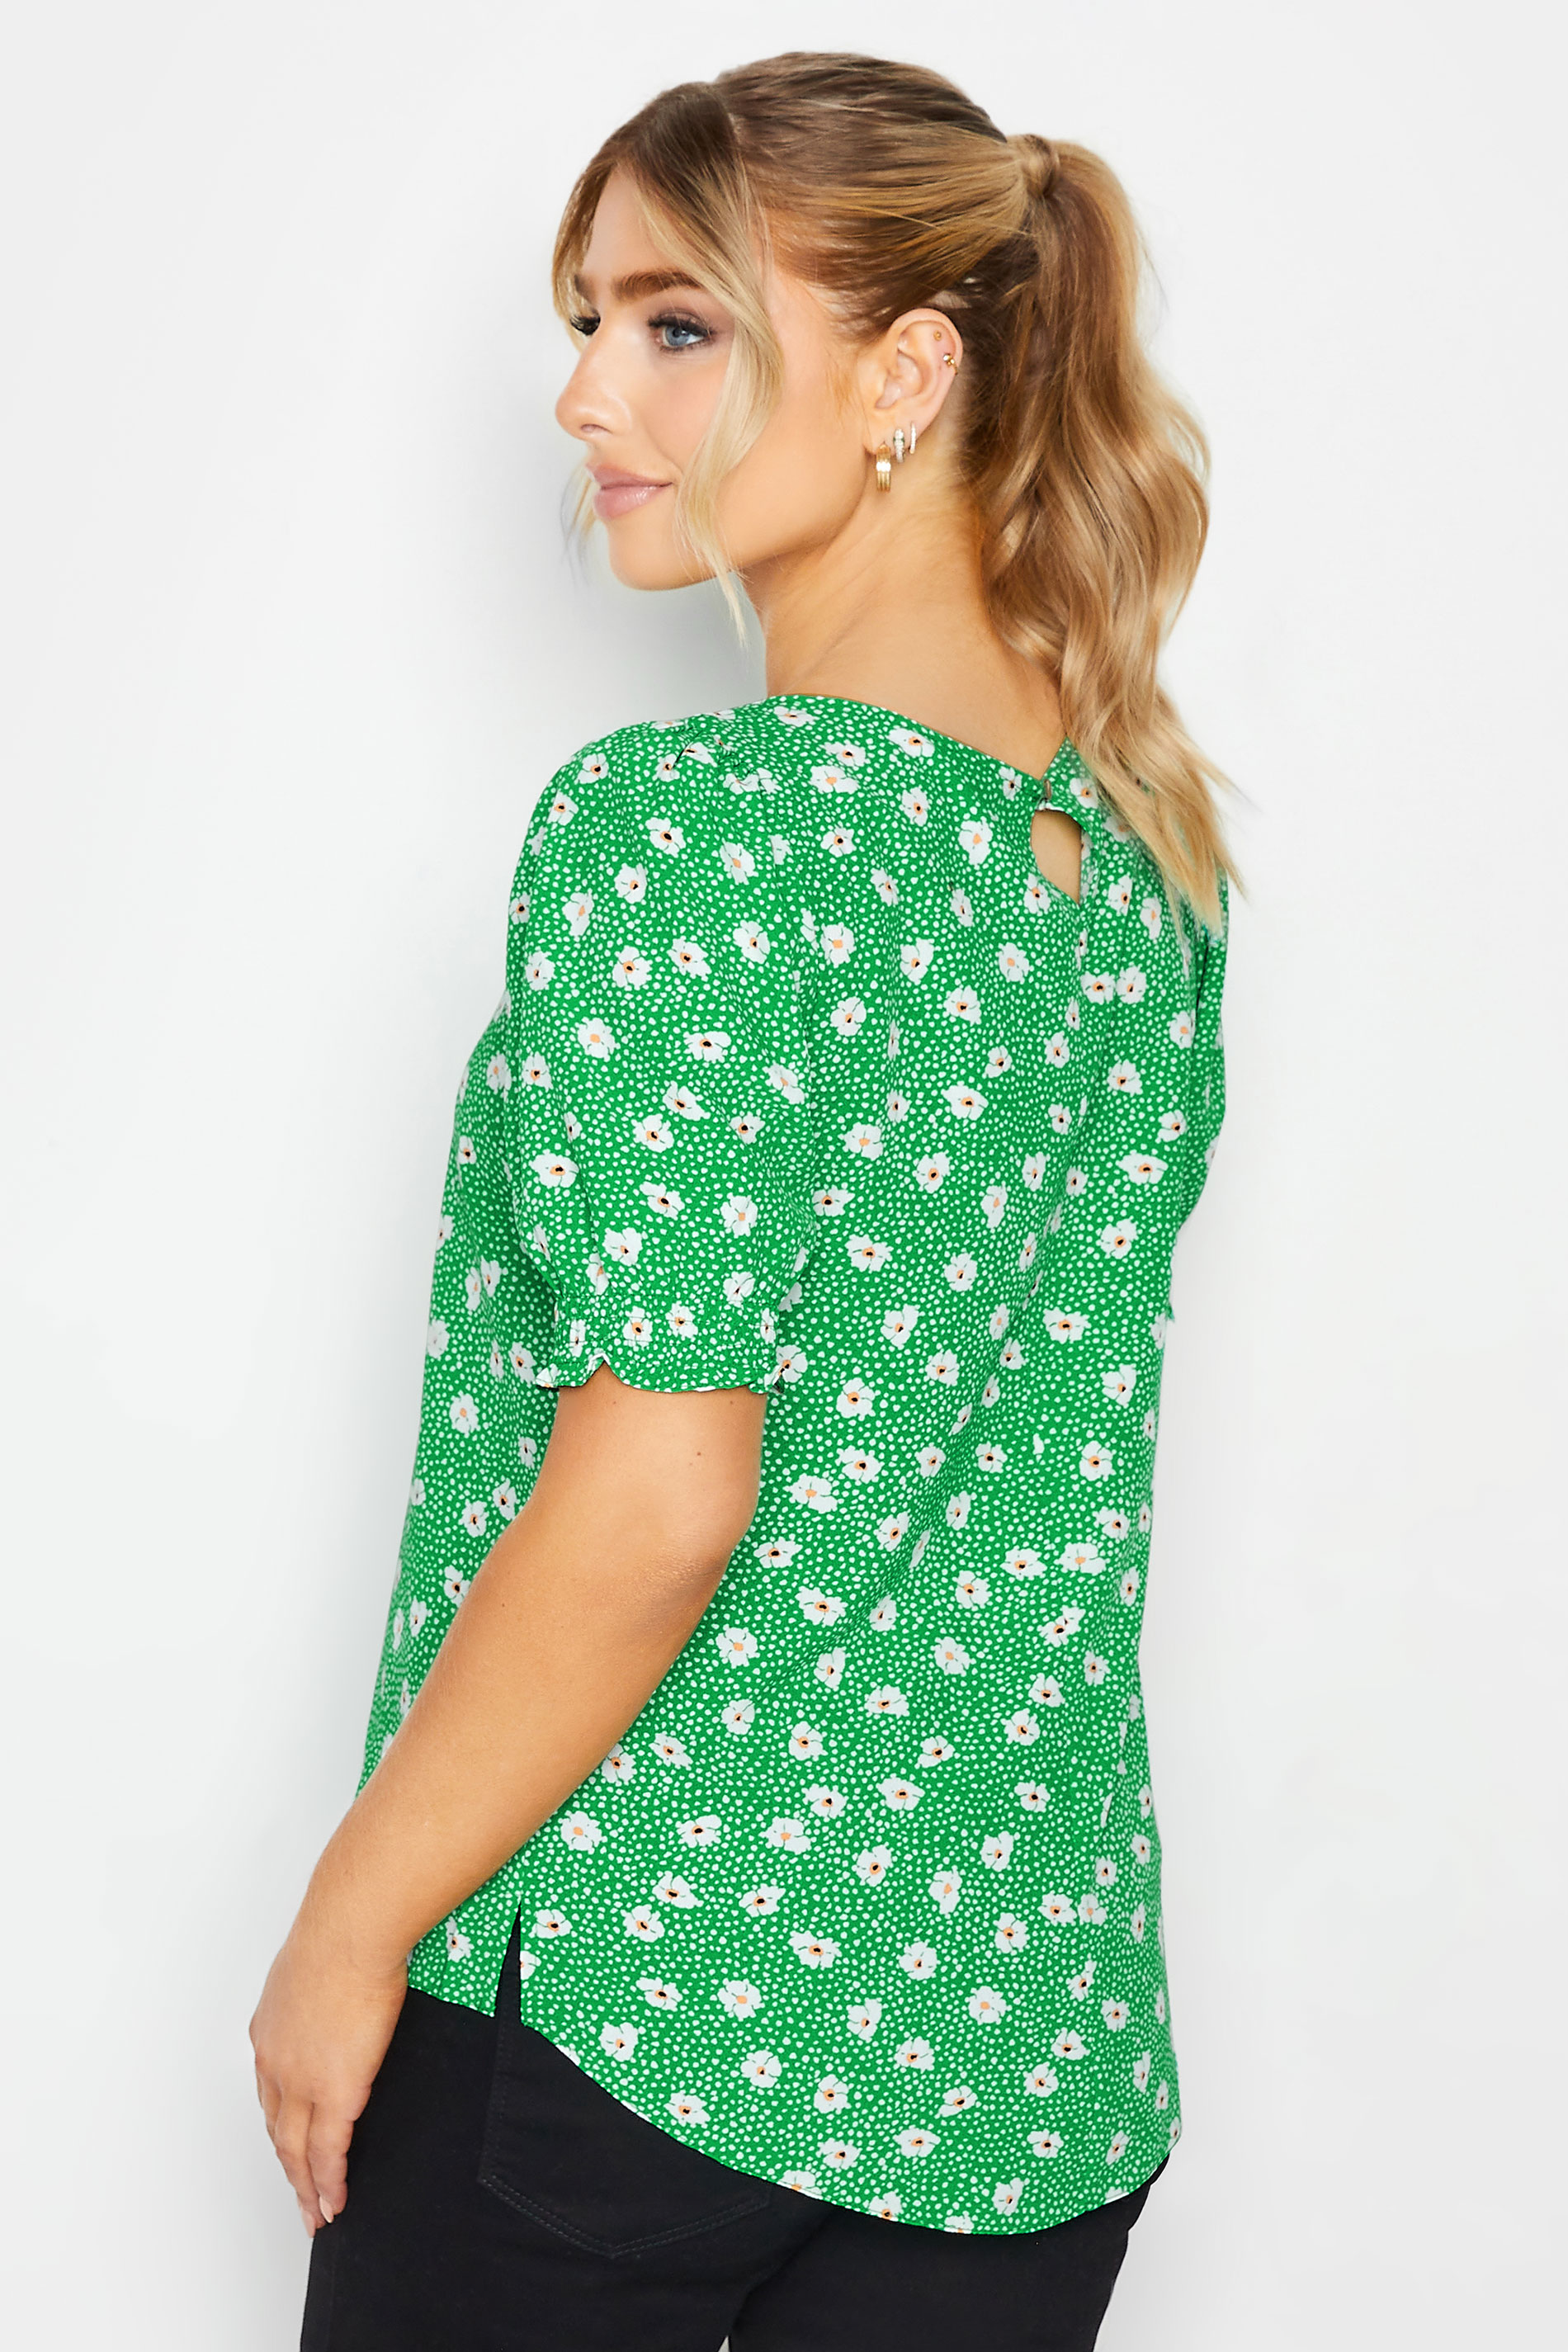 M&Co Green Daisy Print Blouse | M&Co 3